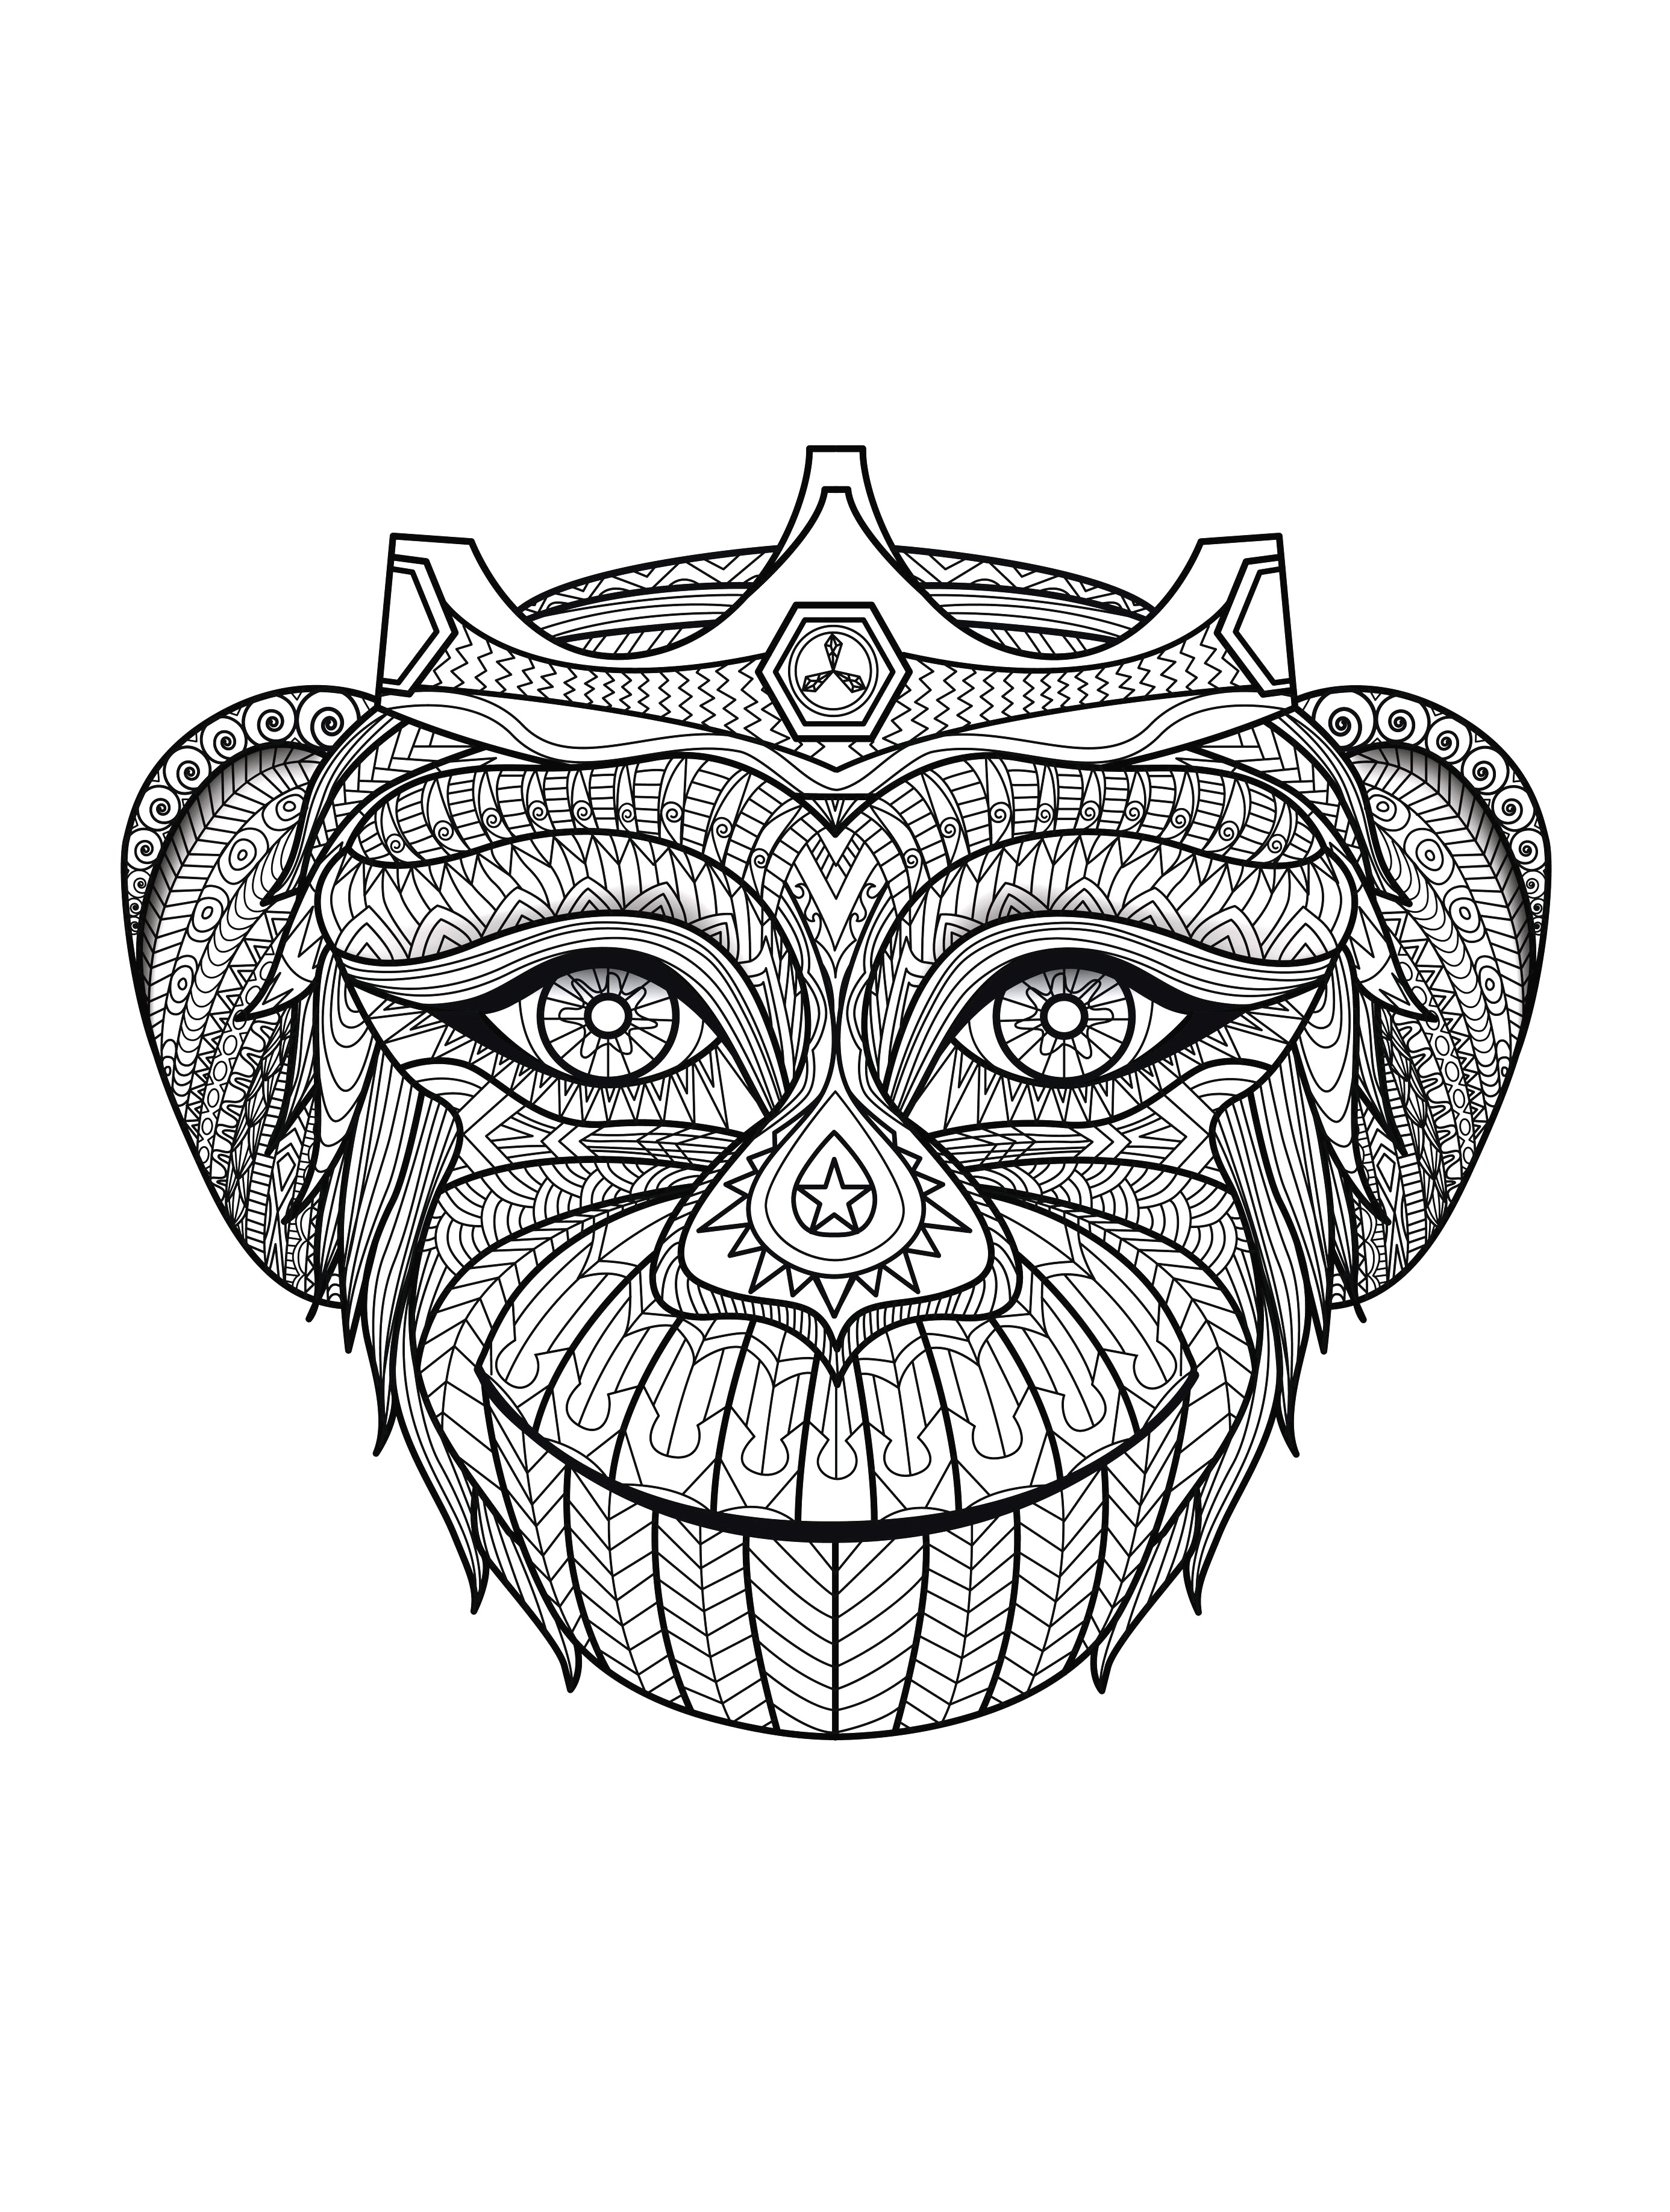 Crowned monkey's head, Artist : Bimdeedee   Source : 123rf